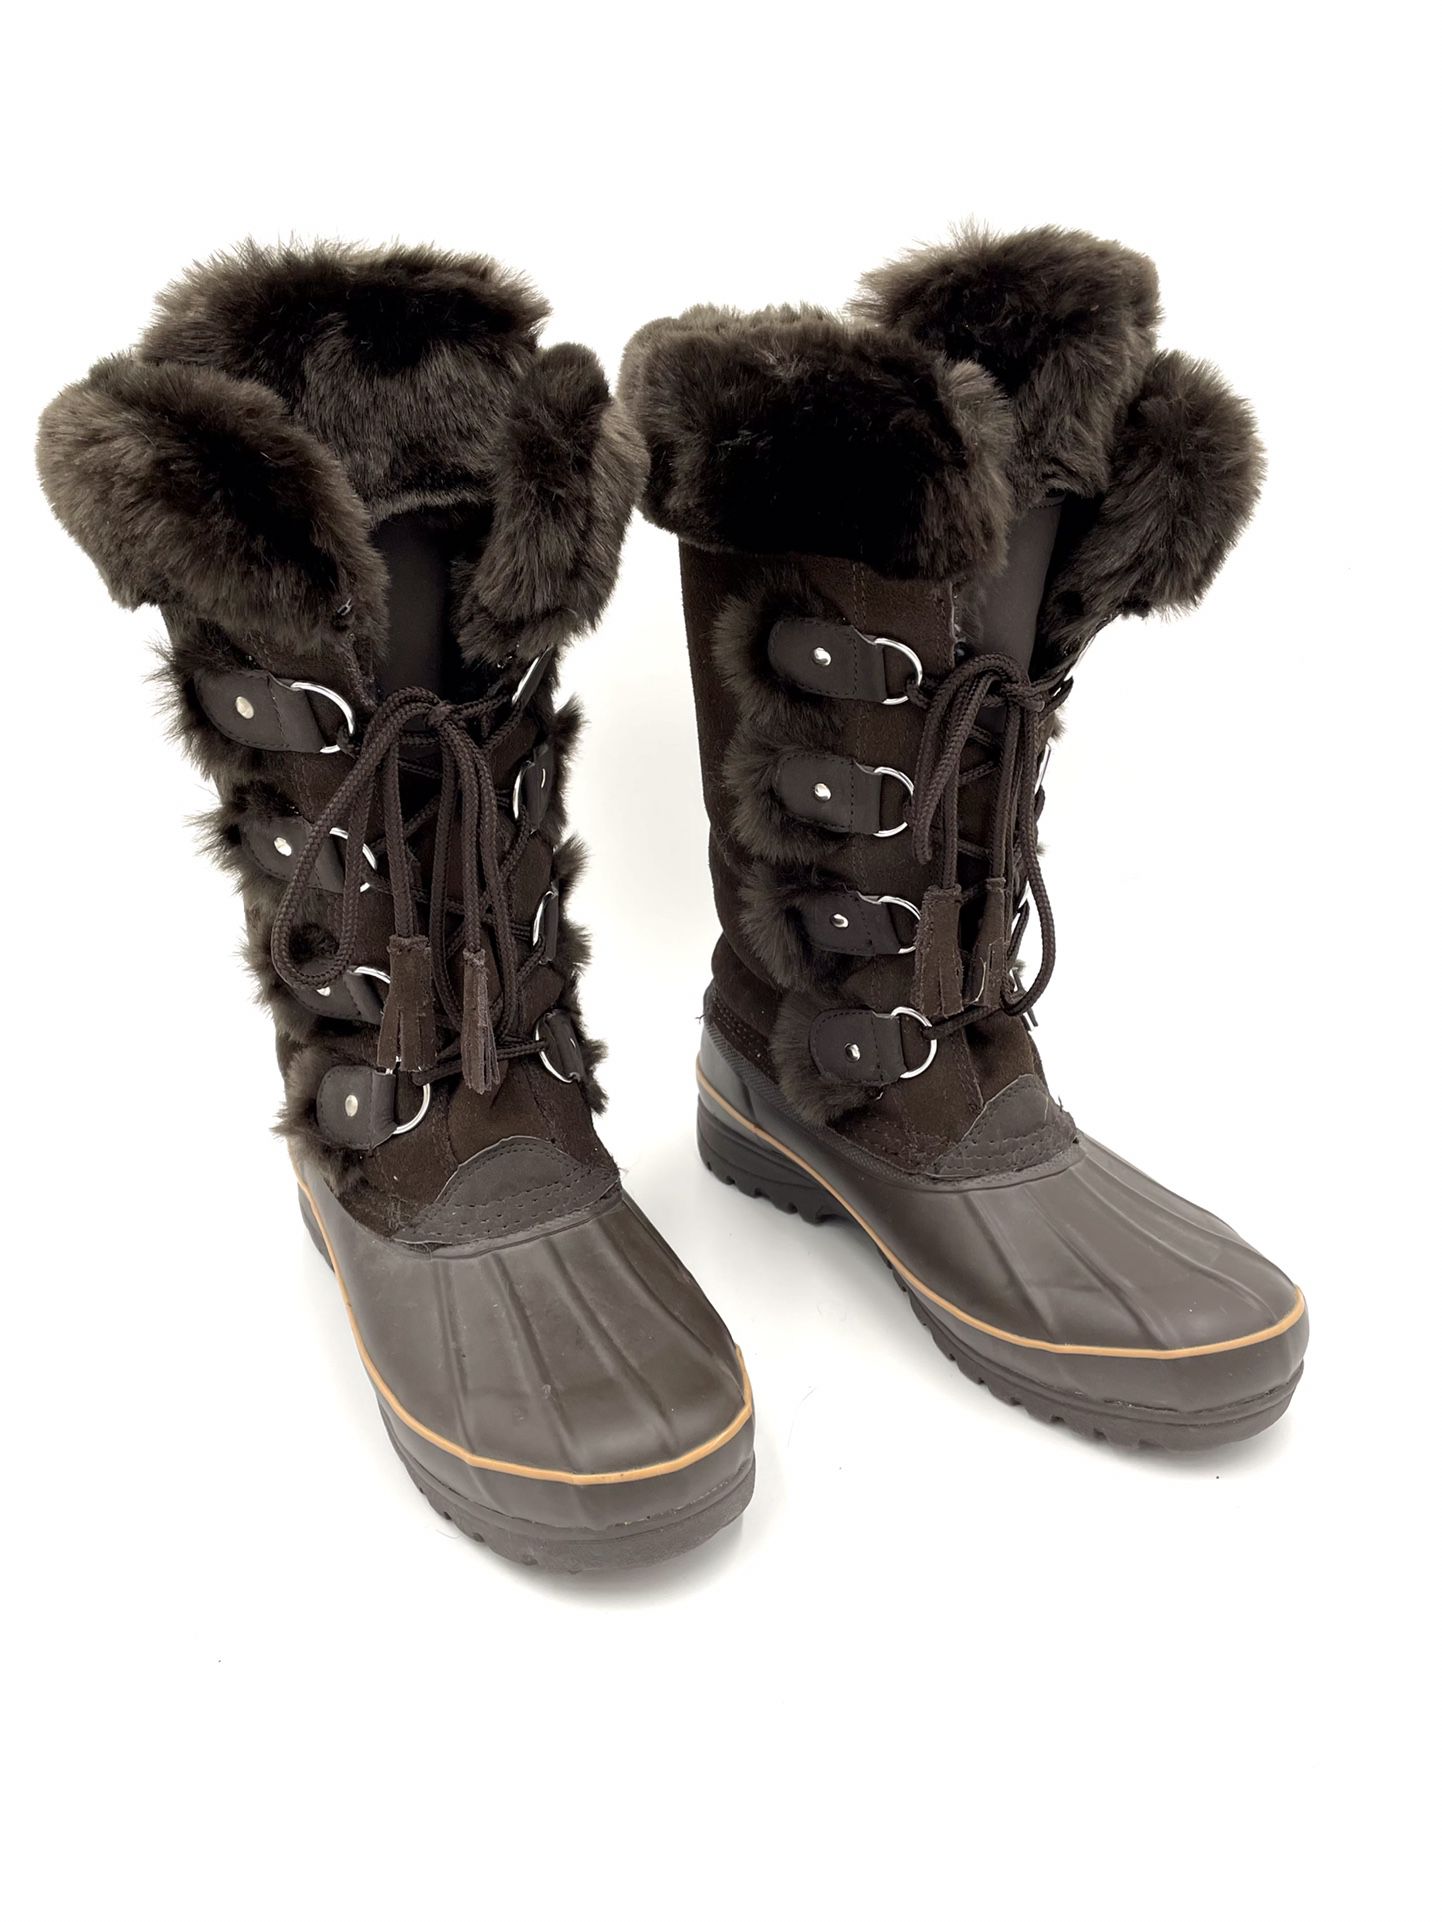 Khombu Women's Brown Nordic Winter Snow Boots Size 9